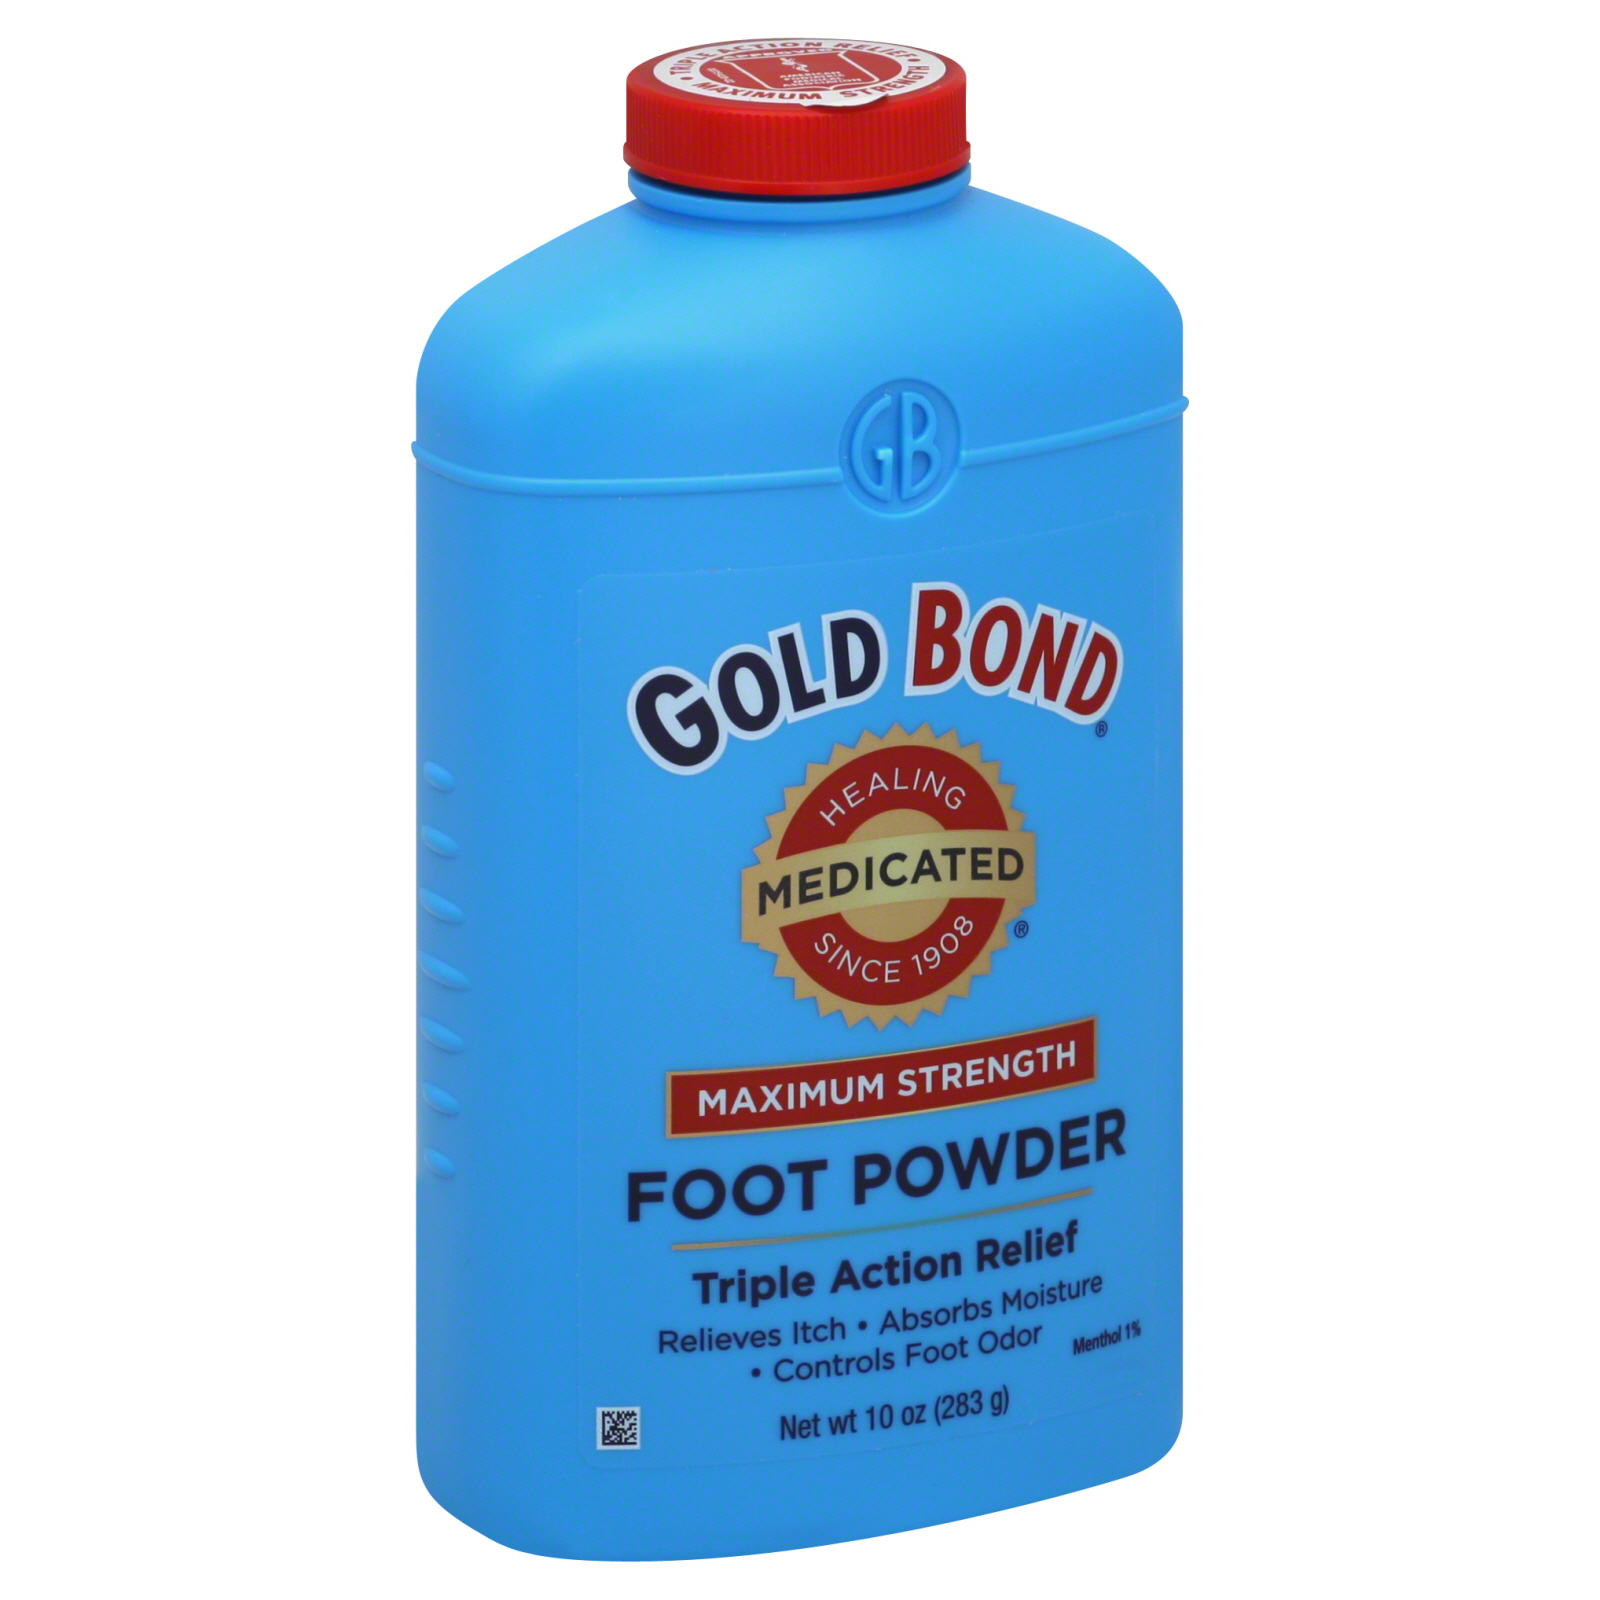 Foot Powder, Medicated, Maximum Strength, 10 oz (283 g)